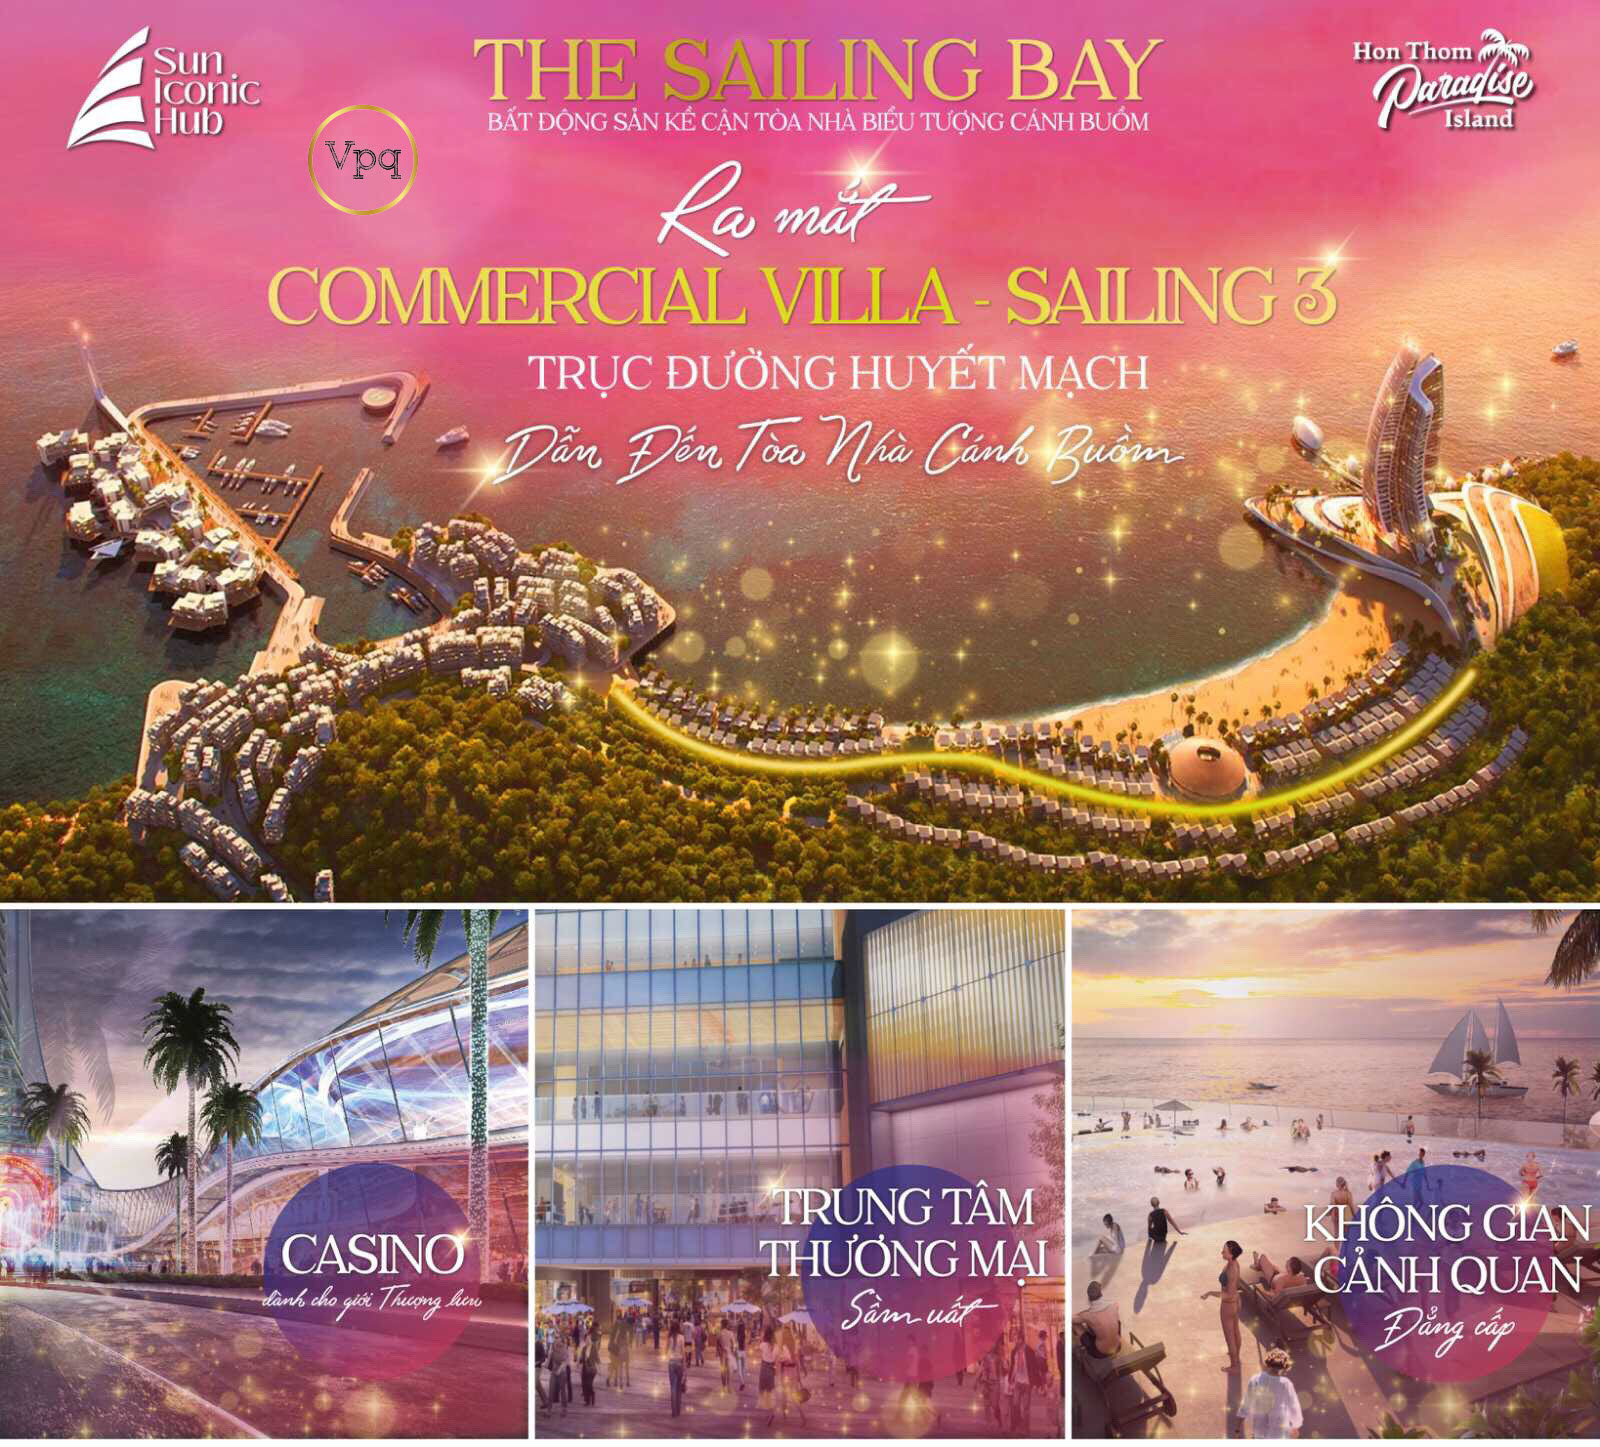 Phân khu The Sailing Bay Sun Iconic Hub Hon Thom